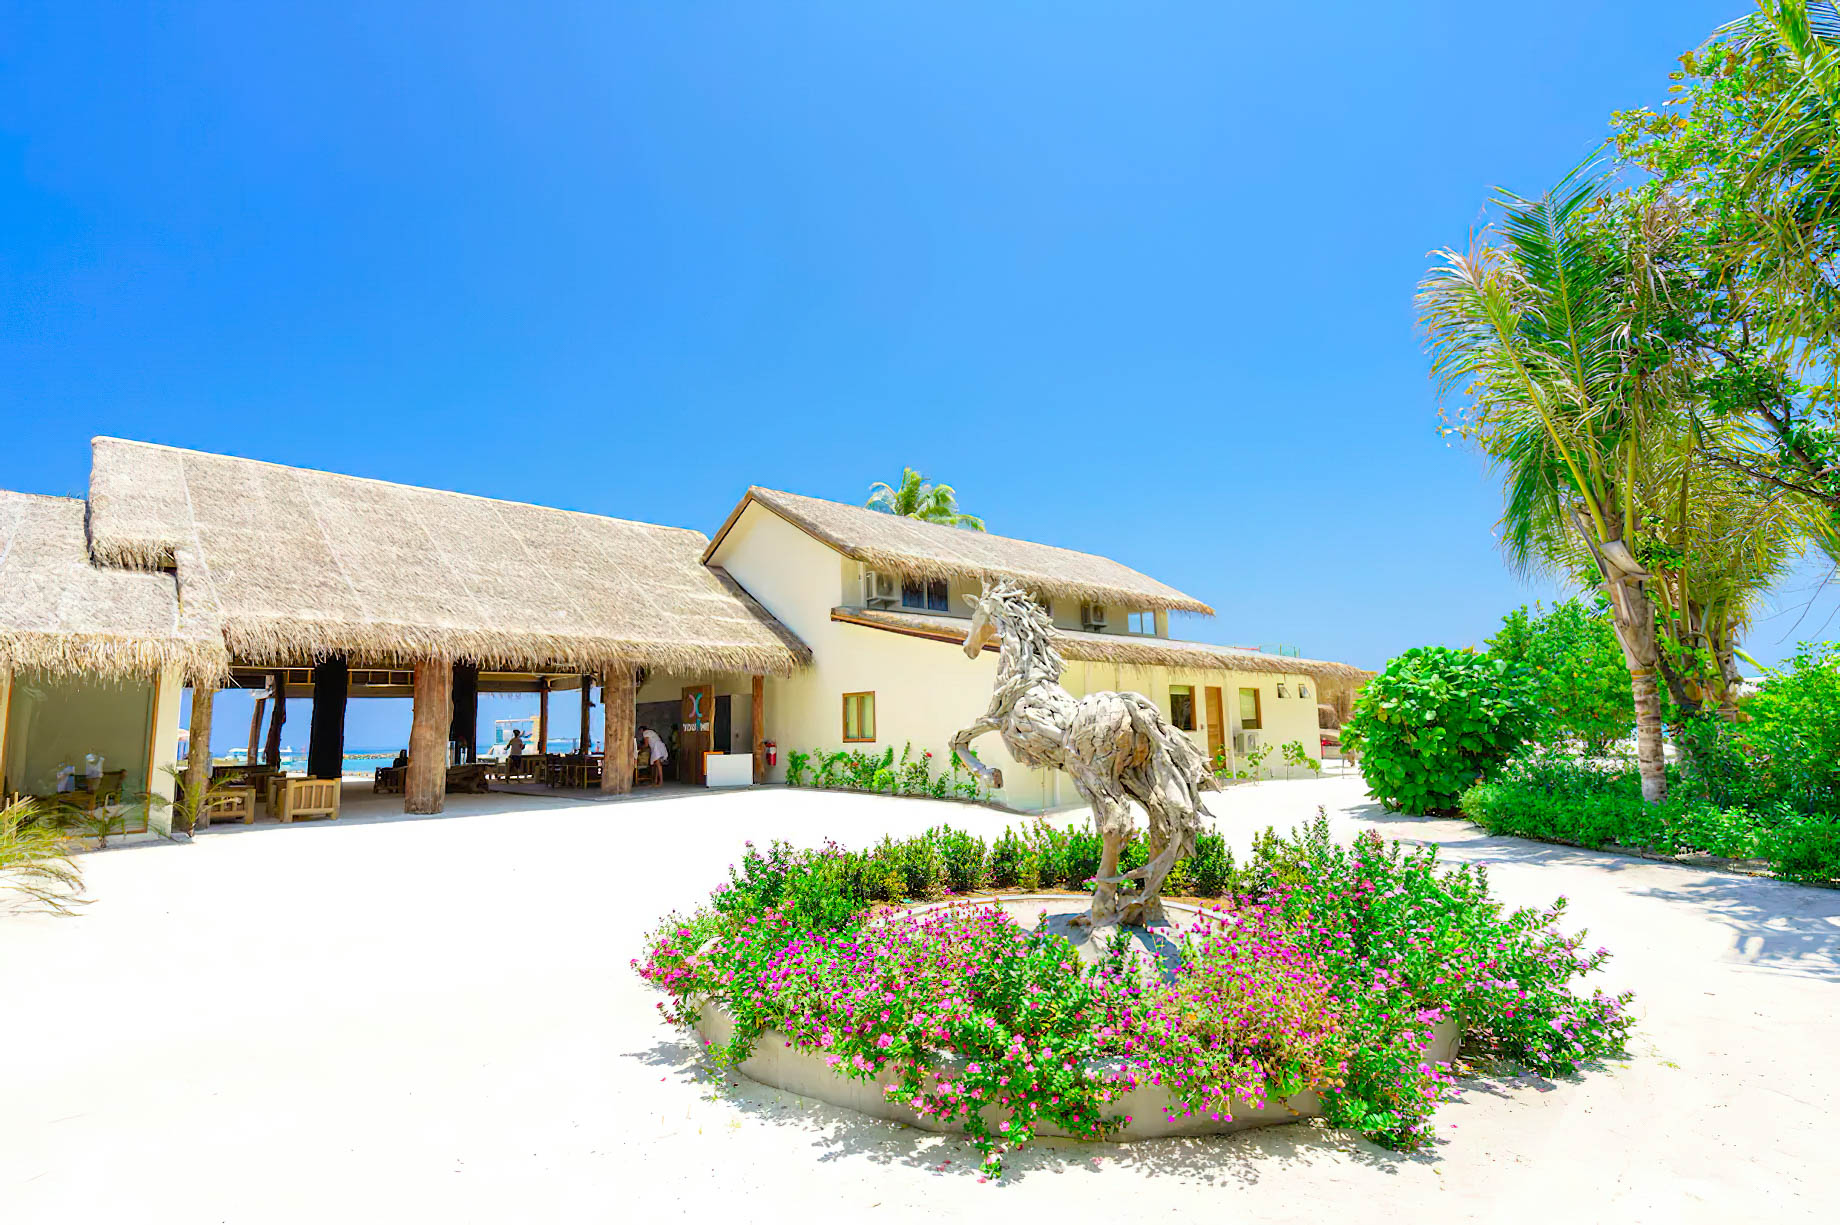 You & Me Maldives Resort – Uthurumaafaru, Raa Atoll, Maldives – Resort Recption